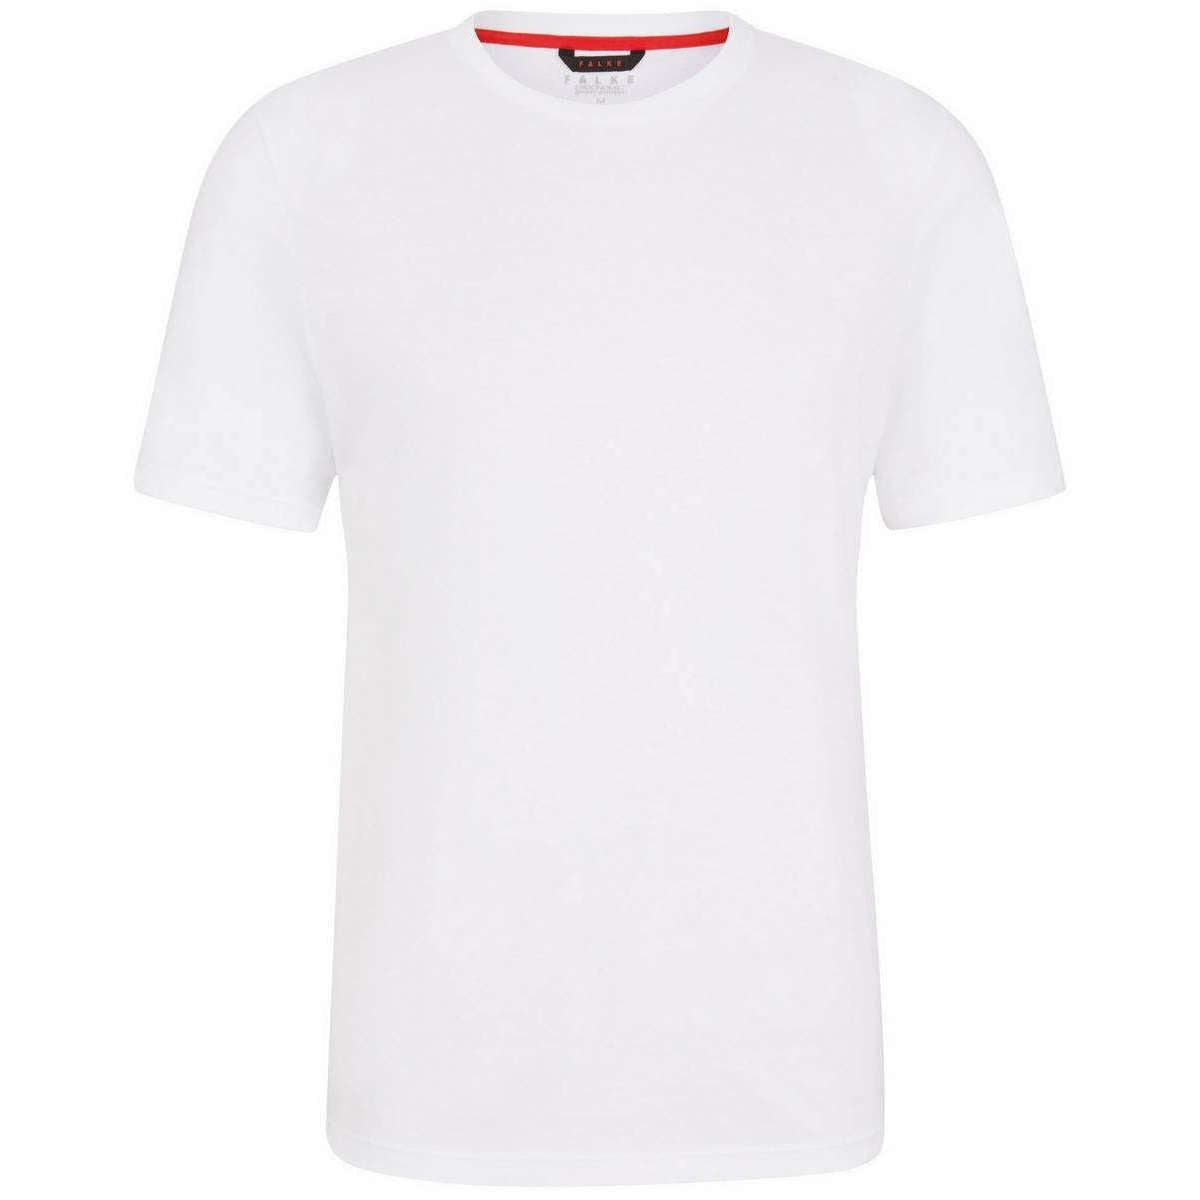 Falke Performance Core Running T-Shirt - White